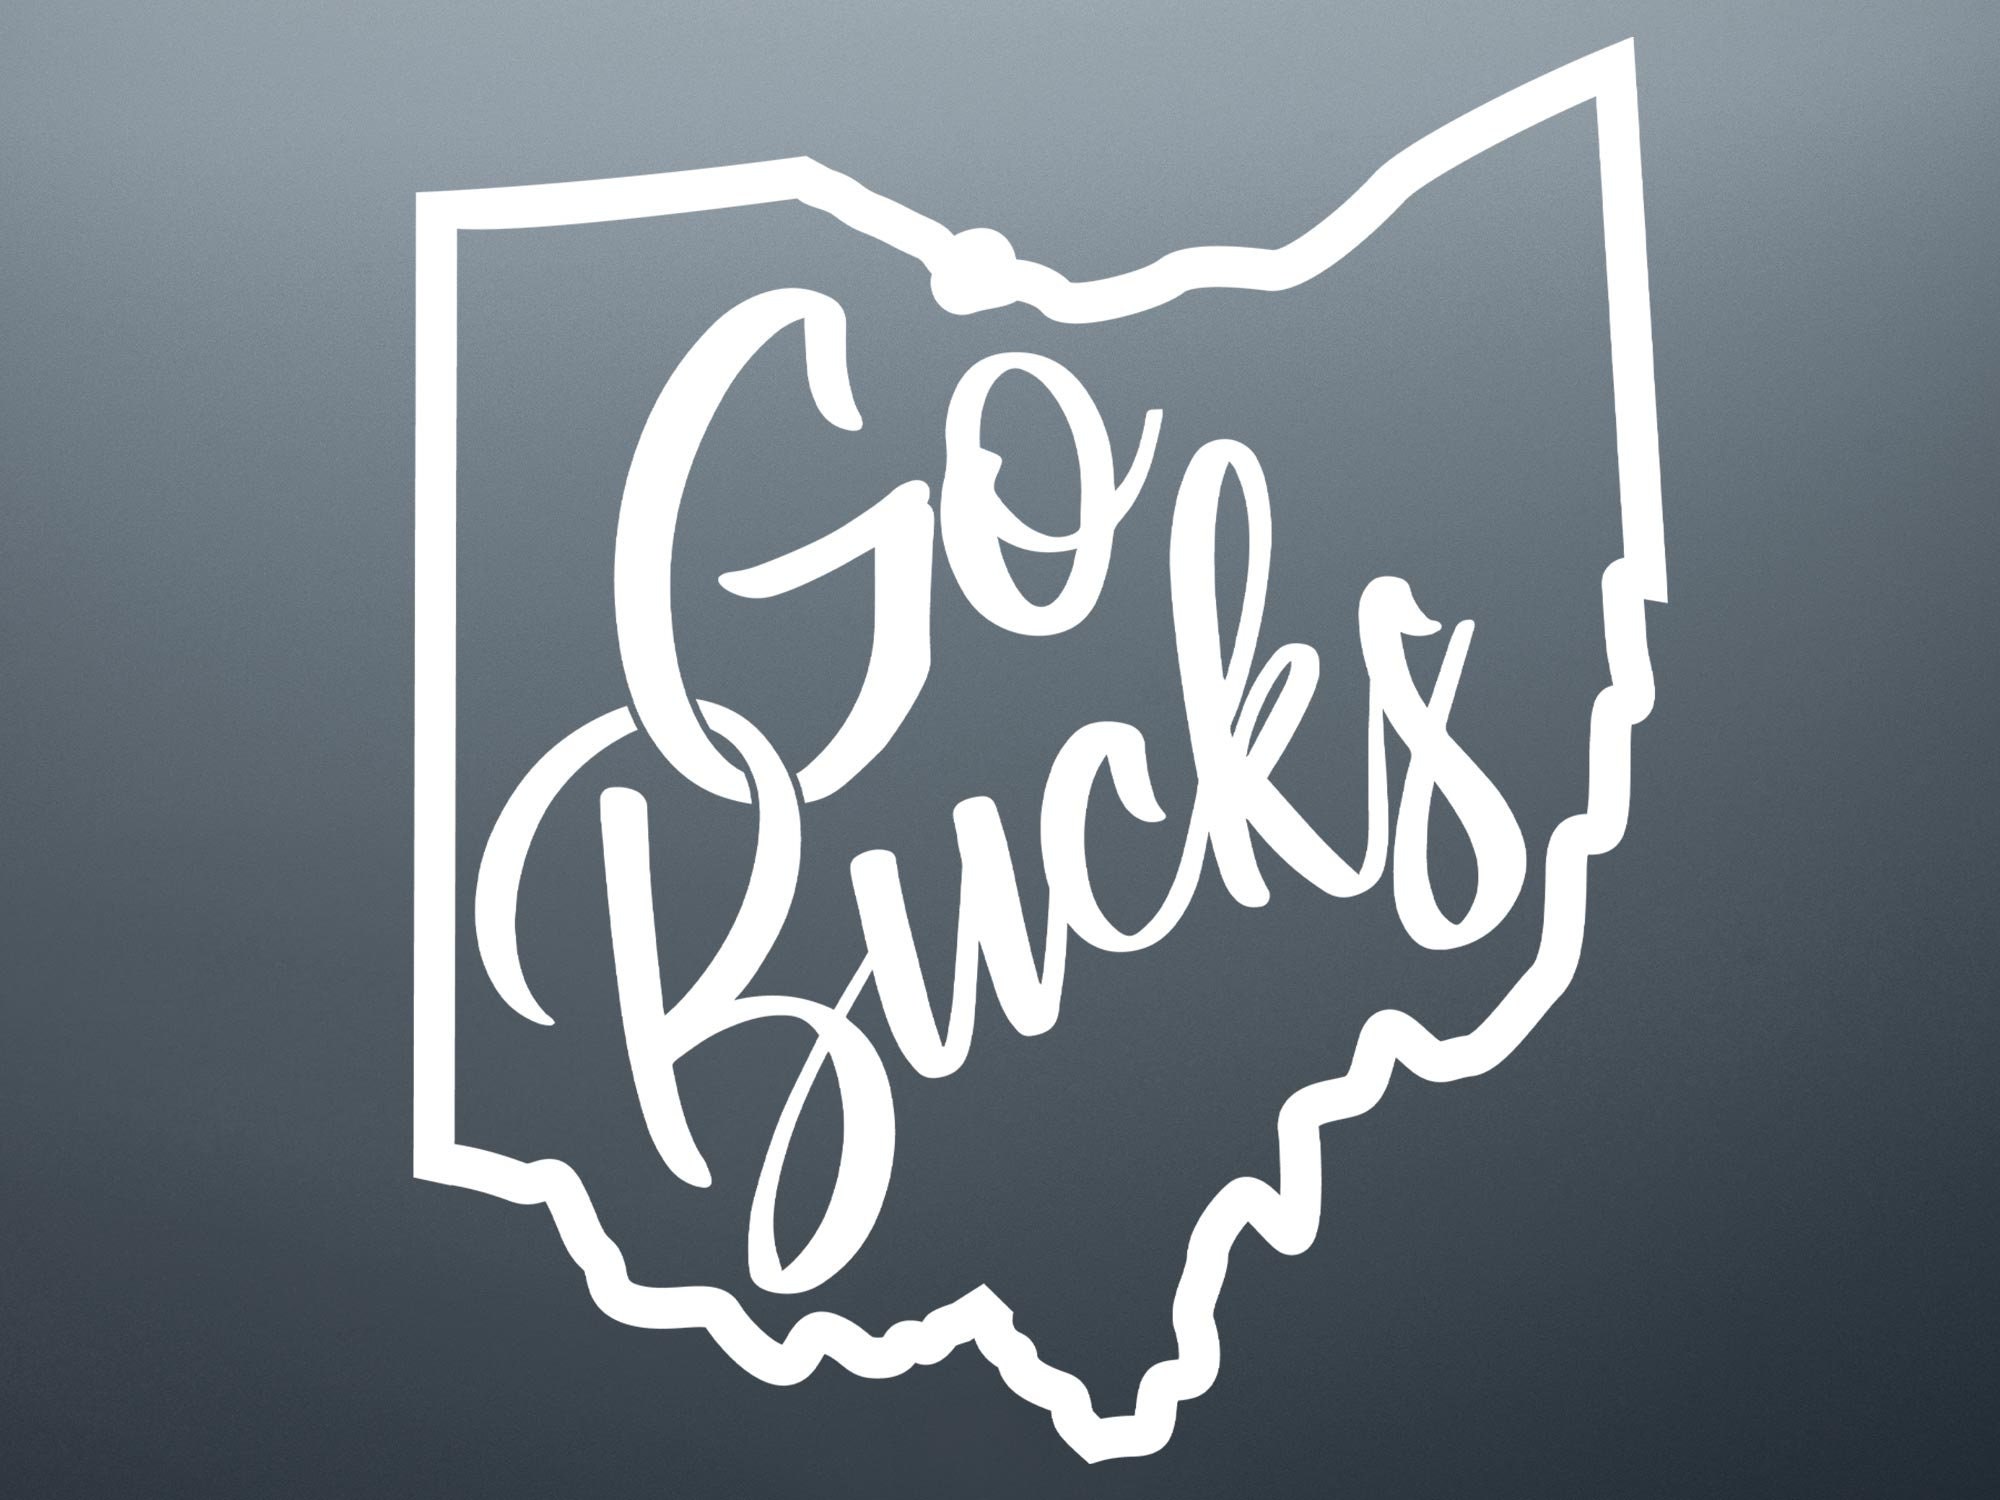 Ohio State Buckeyes Athletic Wordmark YETI® White Tumbler